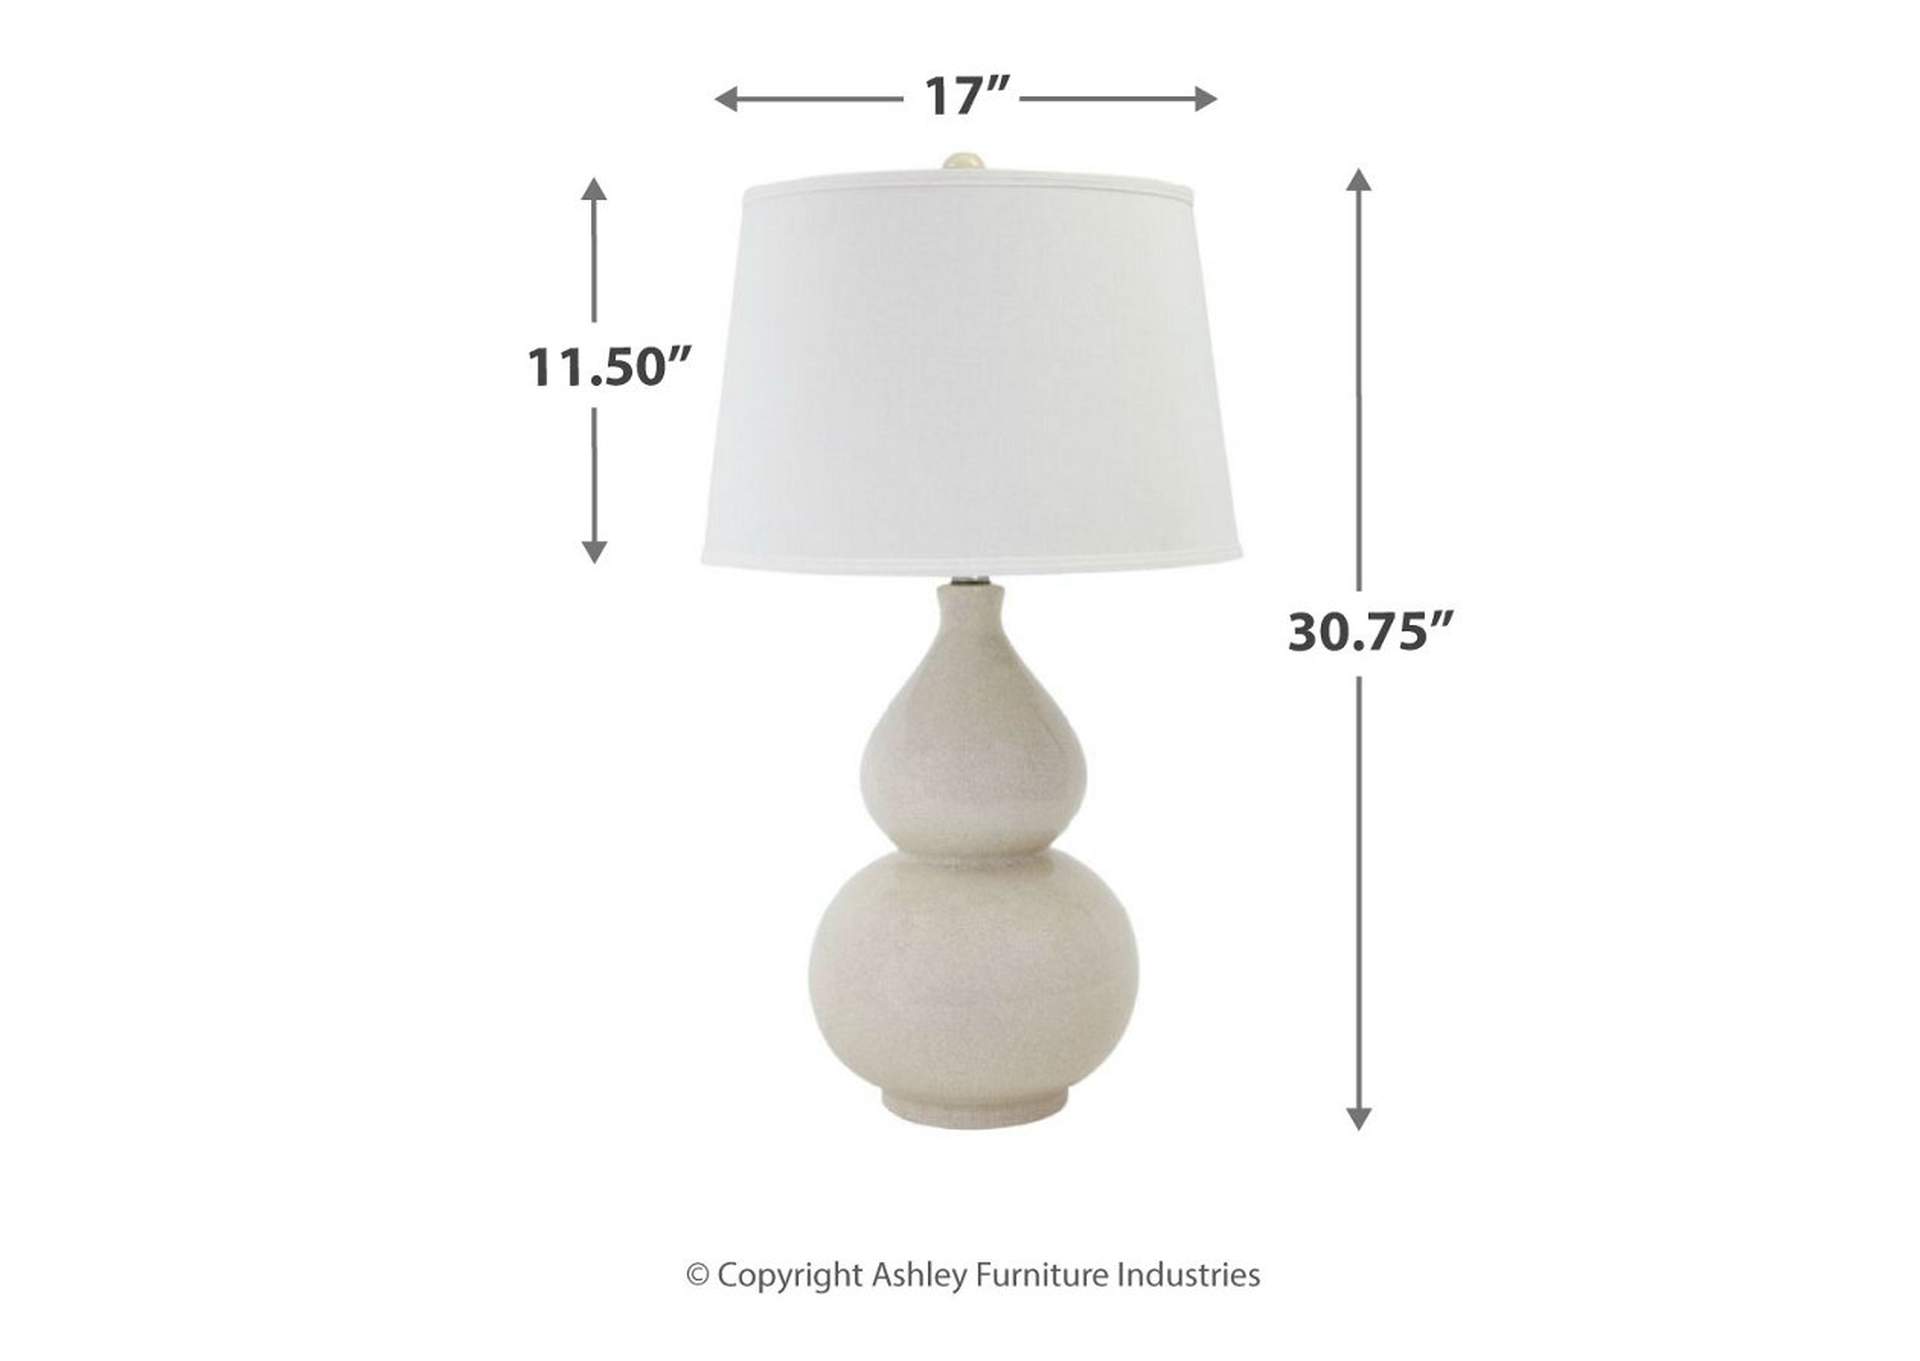 Saffi Table Lamp,Signature Design By Ashley